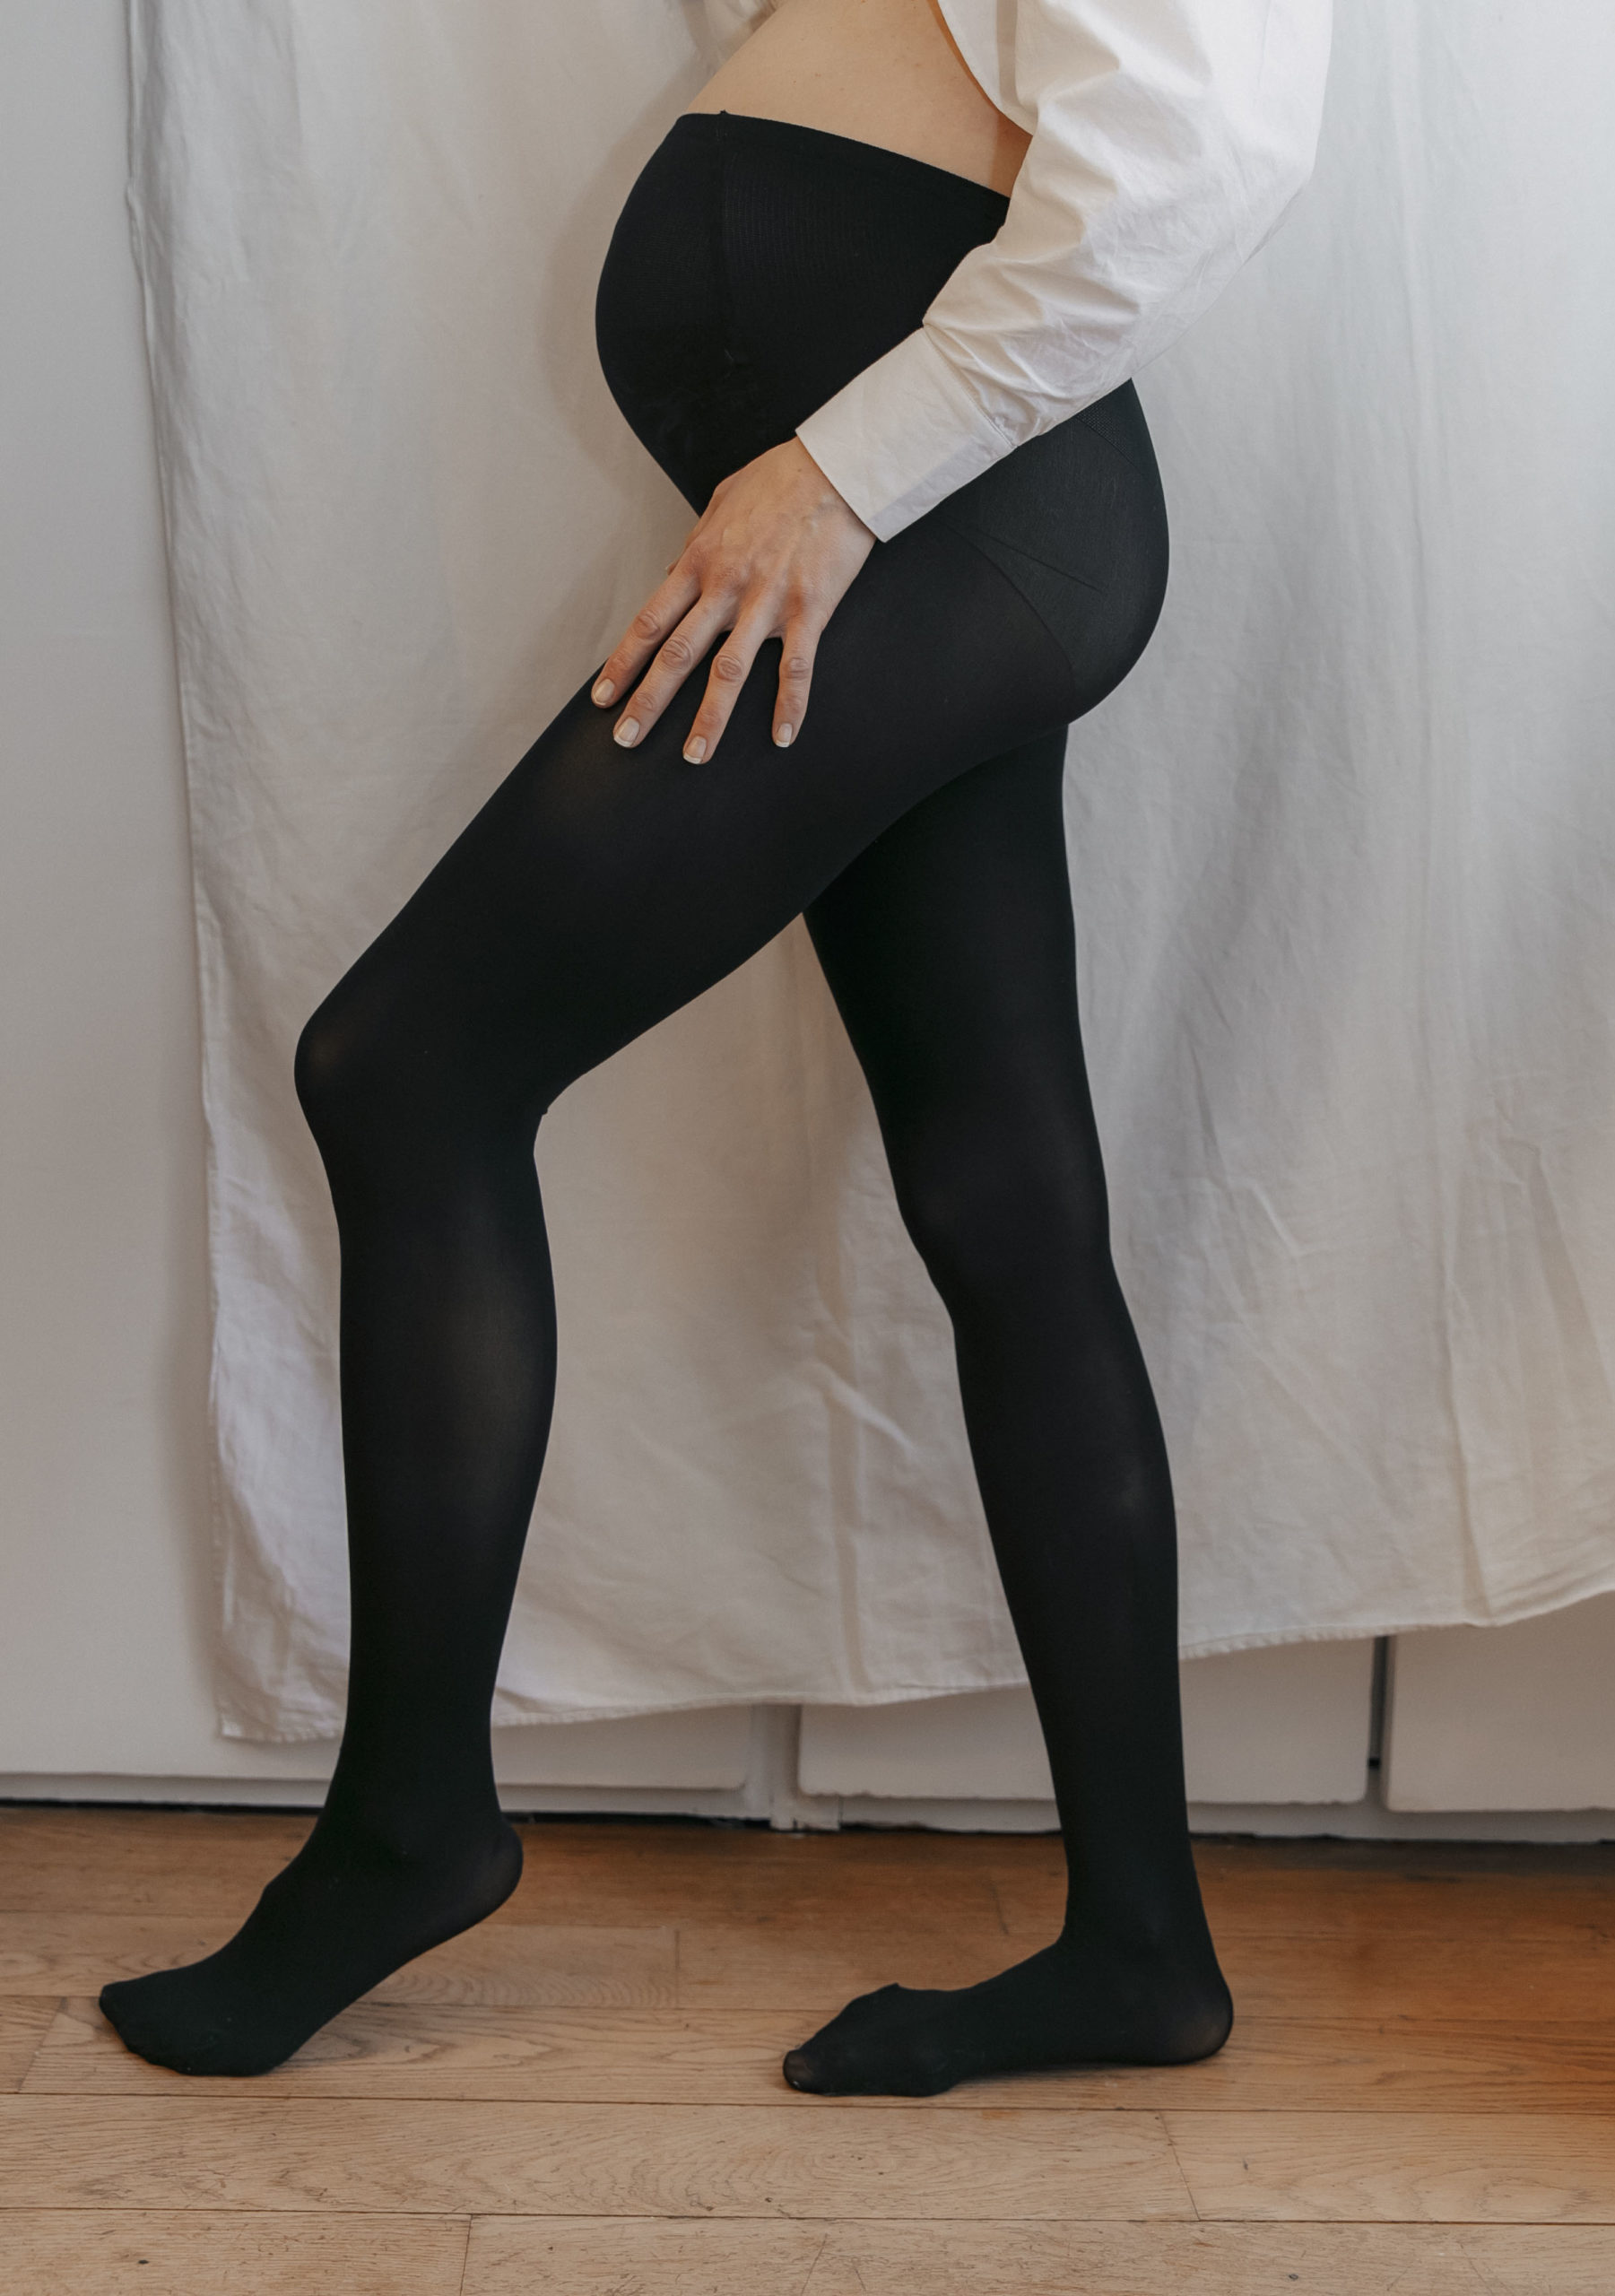 Legging long de grossesse - noir, Vêtements de grossesse